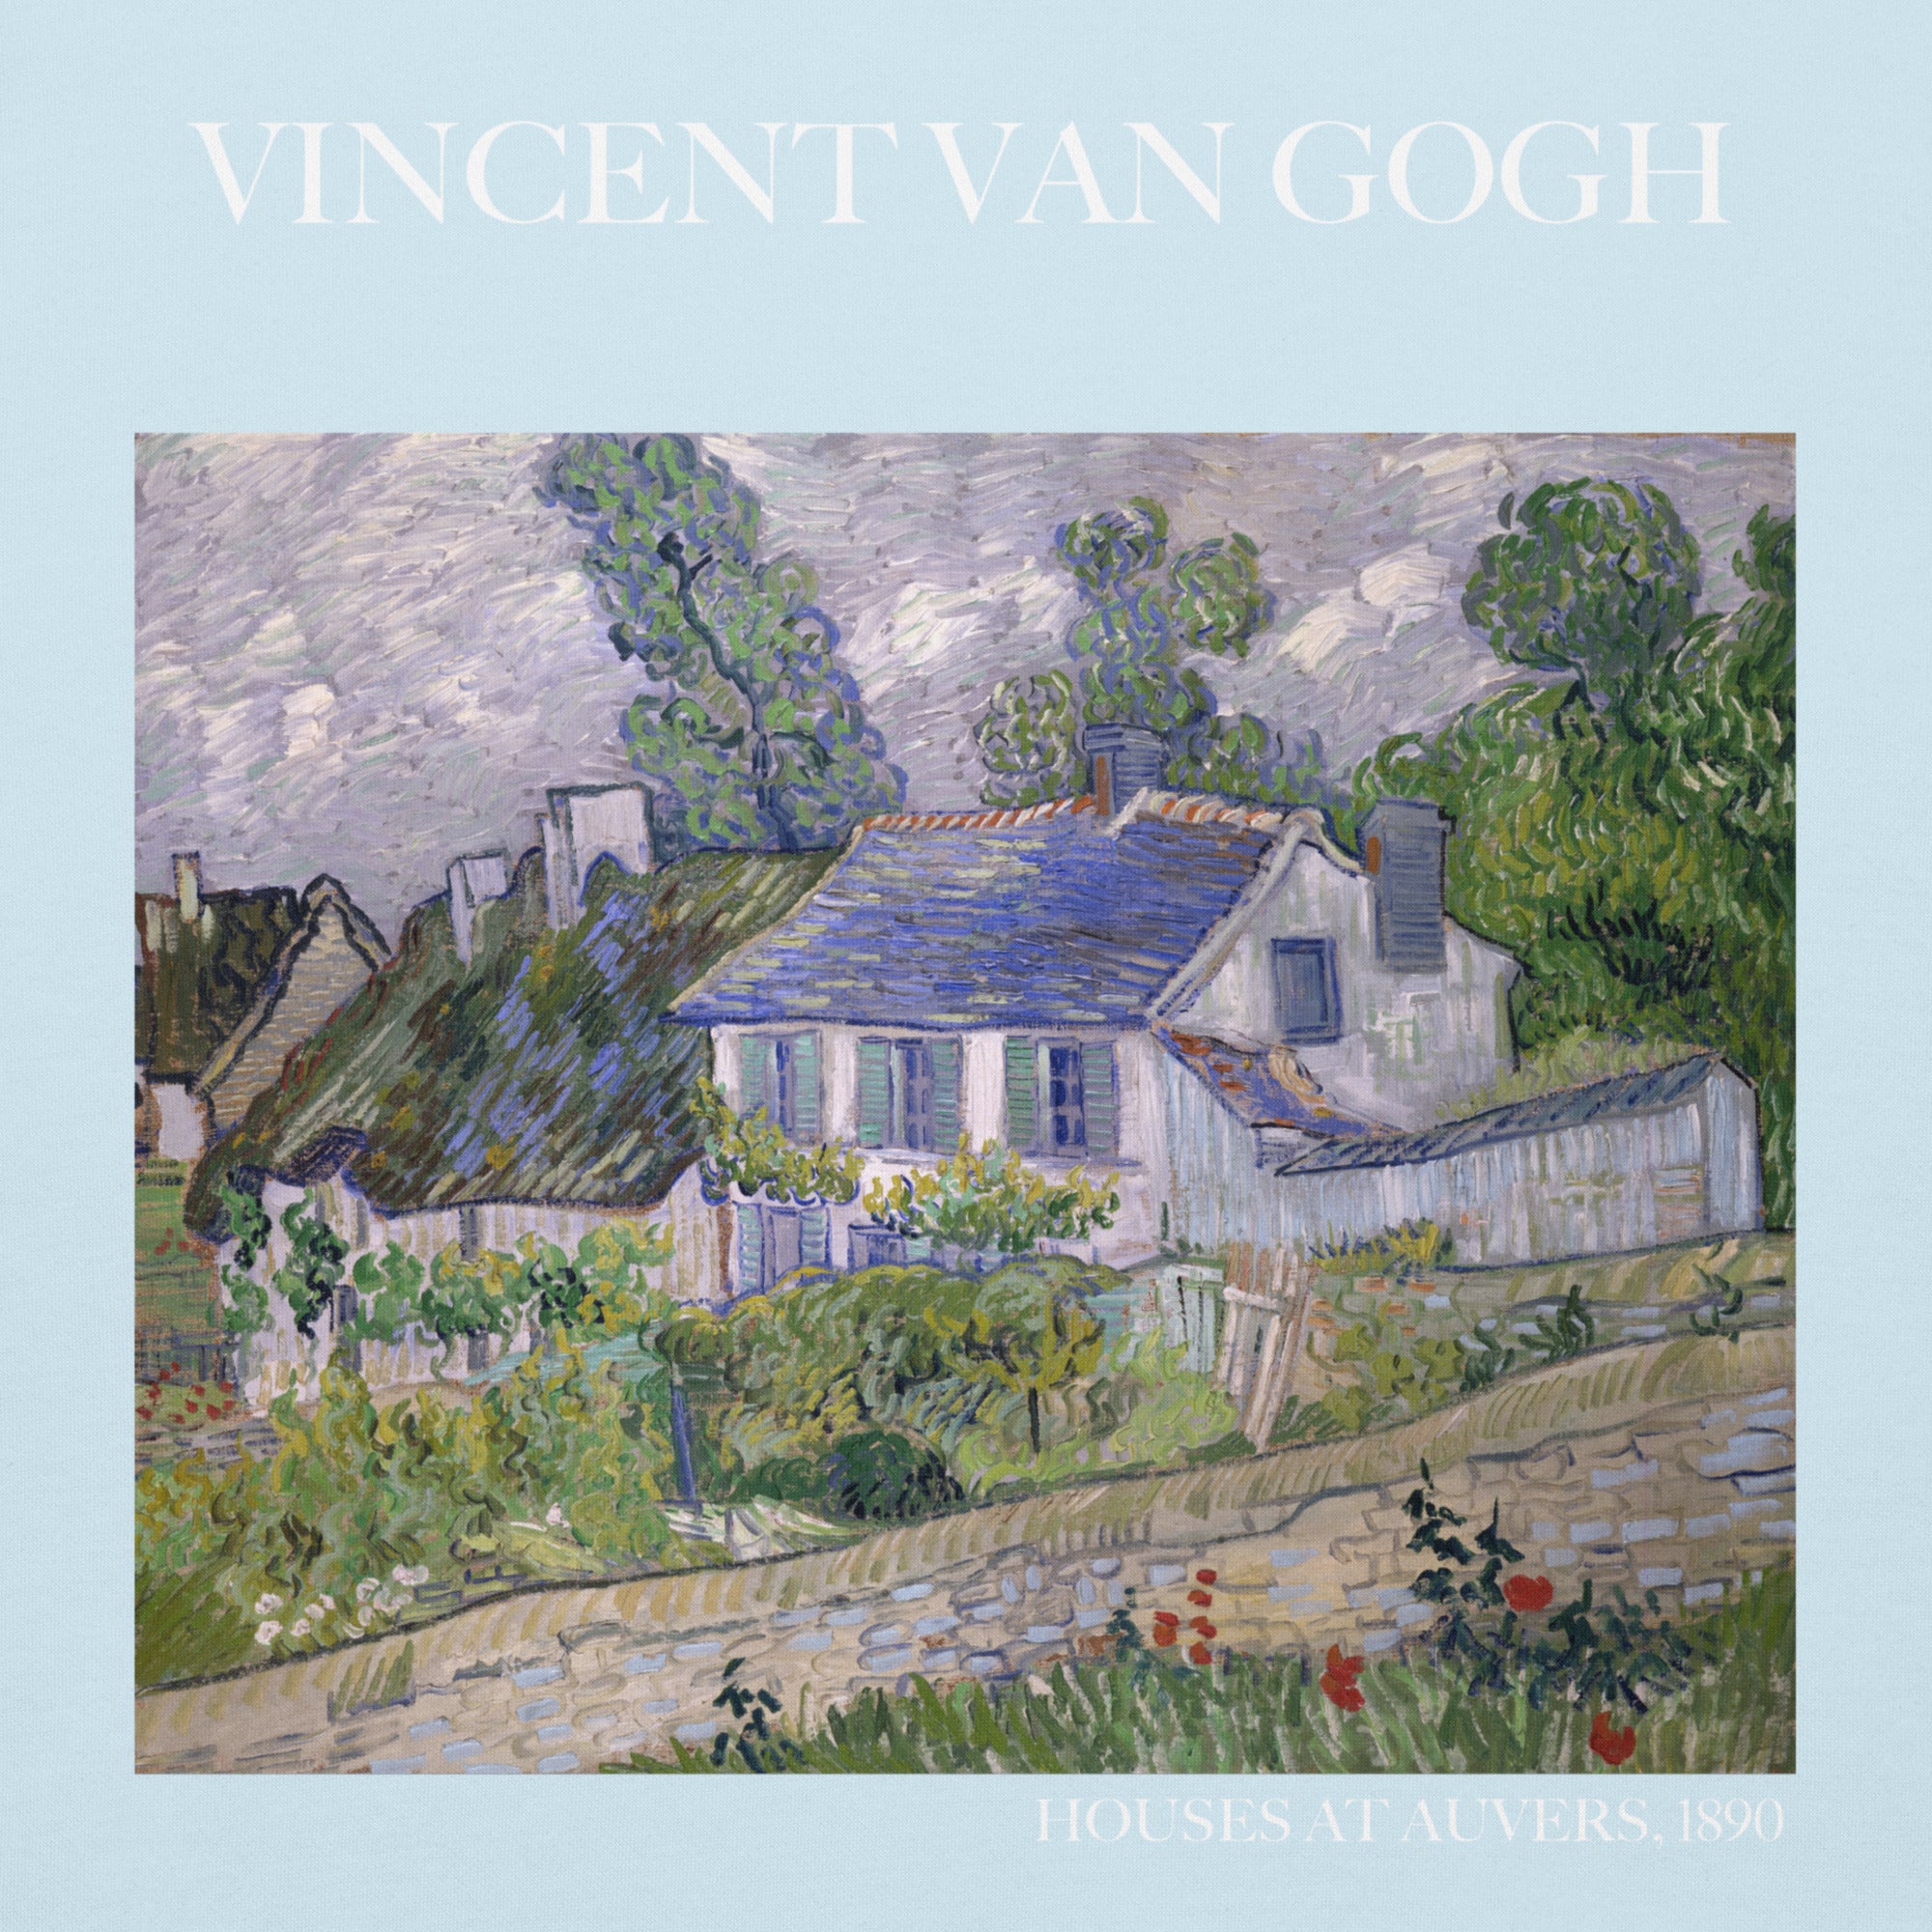 Vincent van Gogh 'Houses at Auvers' Famous Painting Hoodie | Unisex Premium Art Hoodie